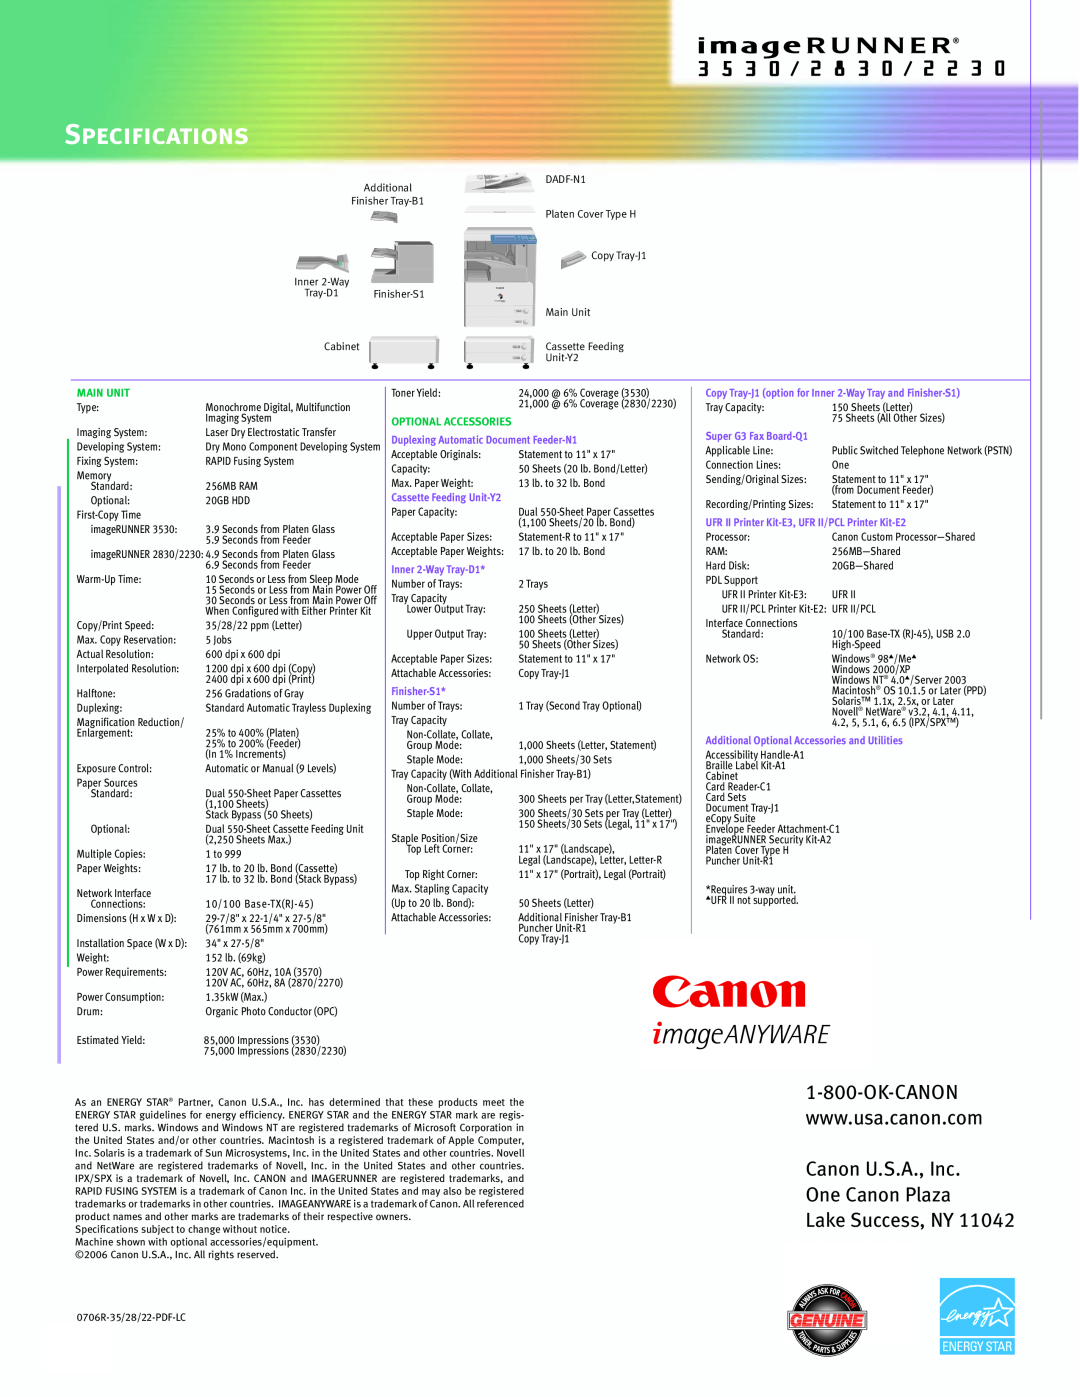 Cannon 2230, 3530, 2830 Specifications, Canon U.S.A., Inc One Canon Plaza Lake Success, NY, Main Unit, Inner 2-Way Tray-D1 